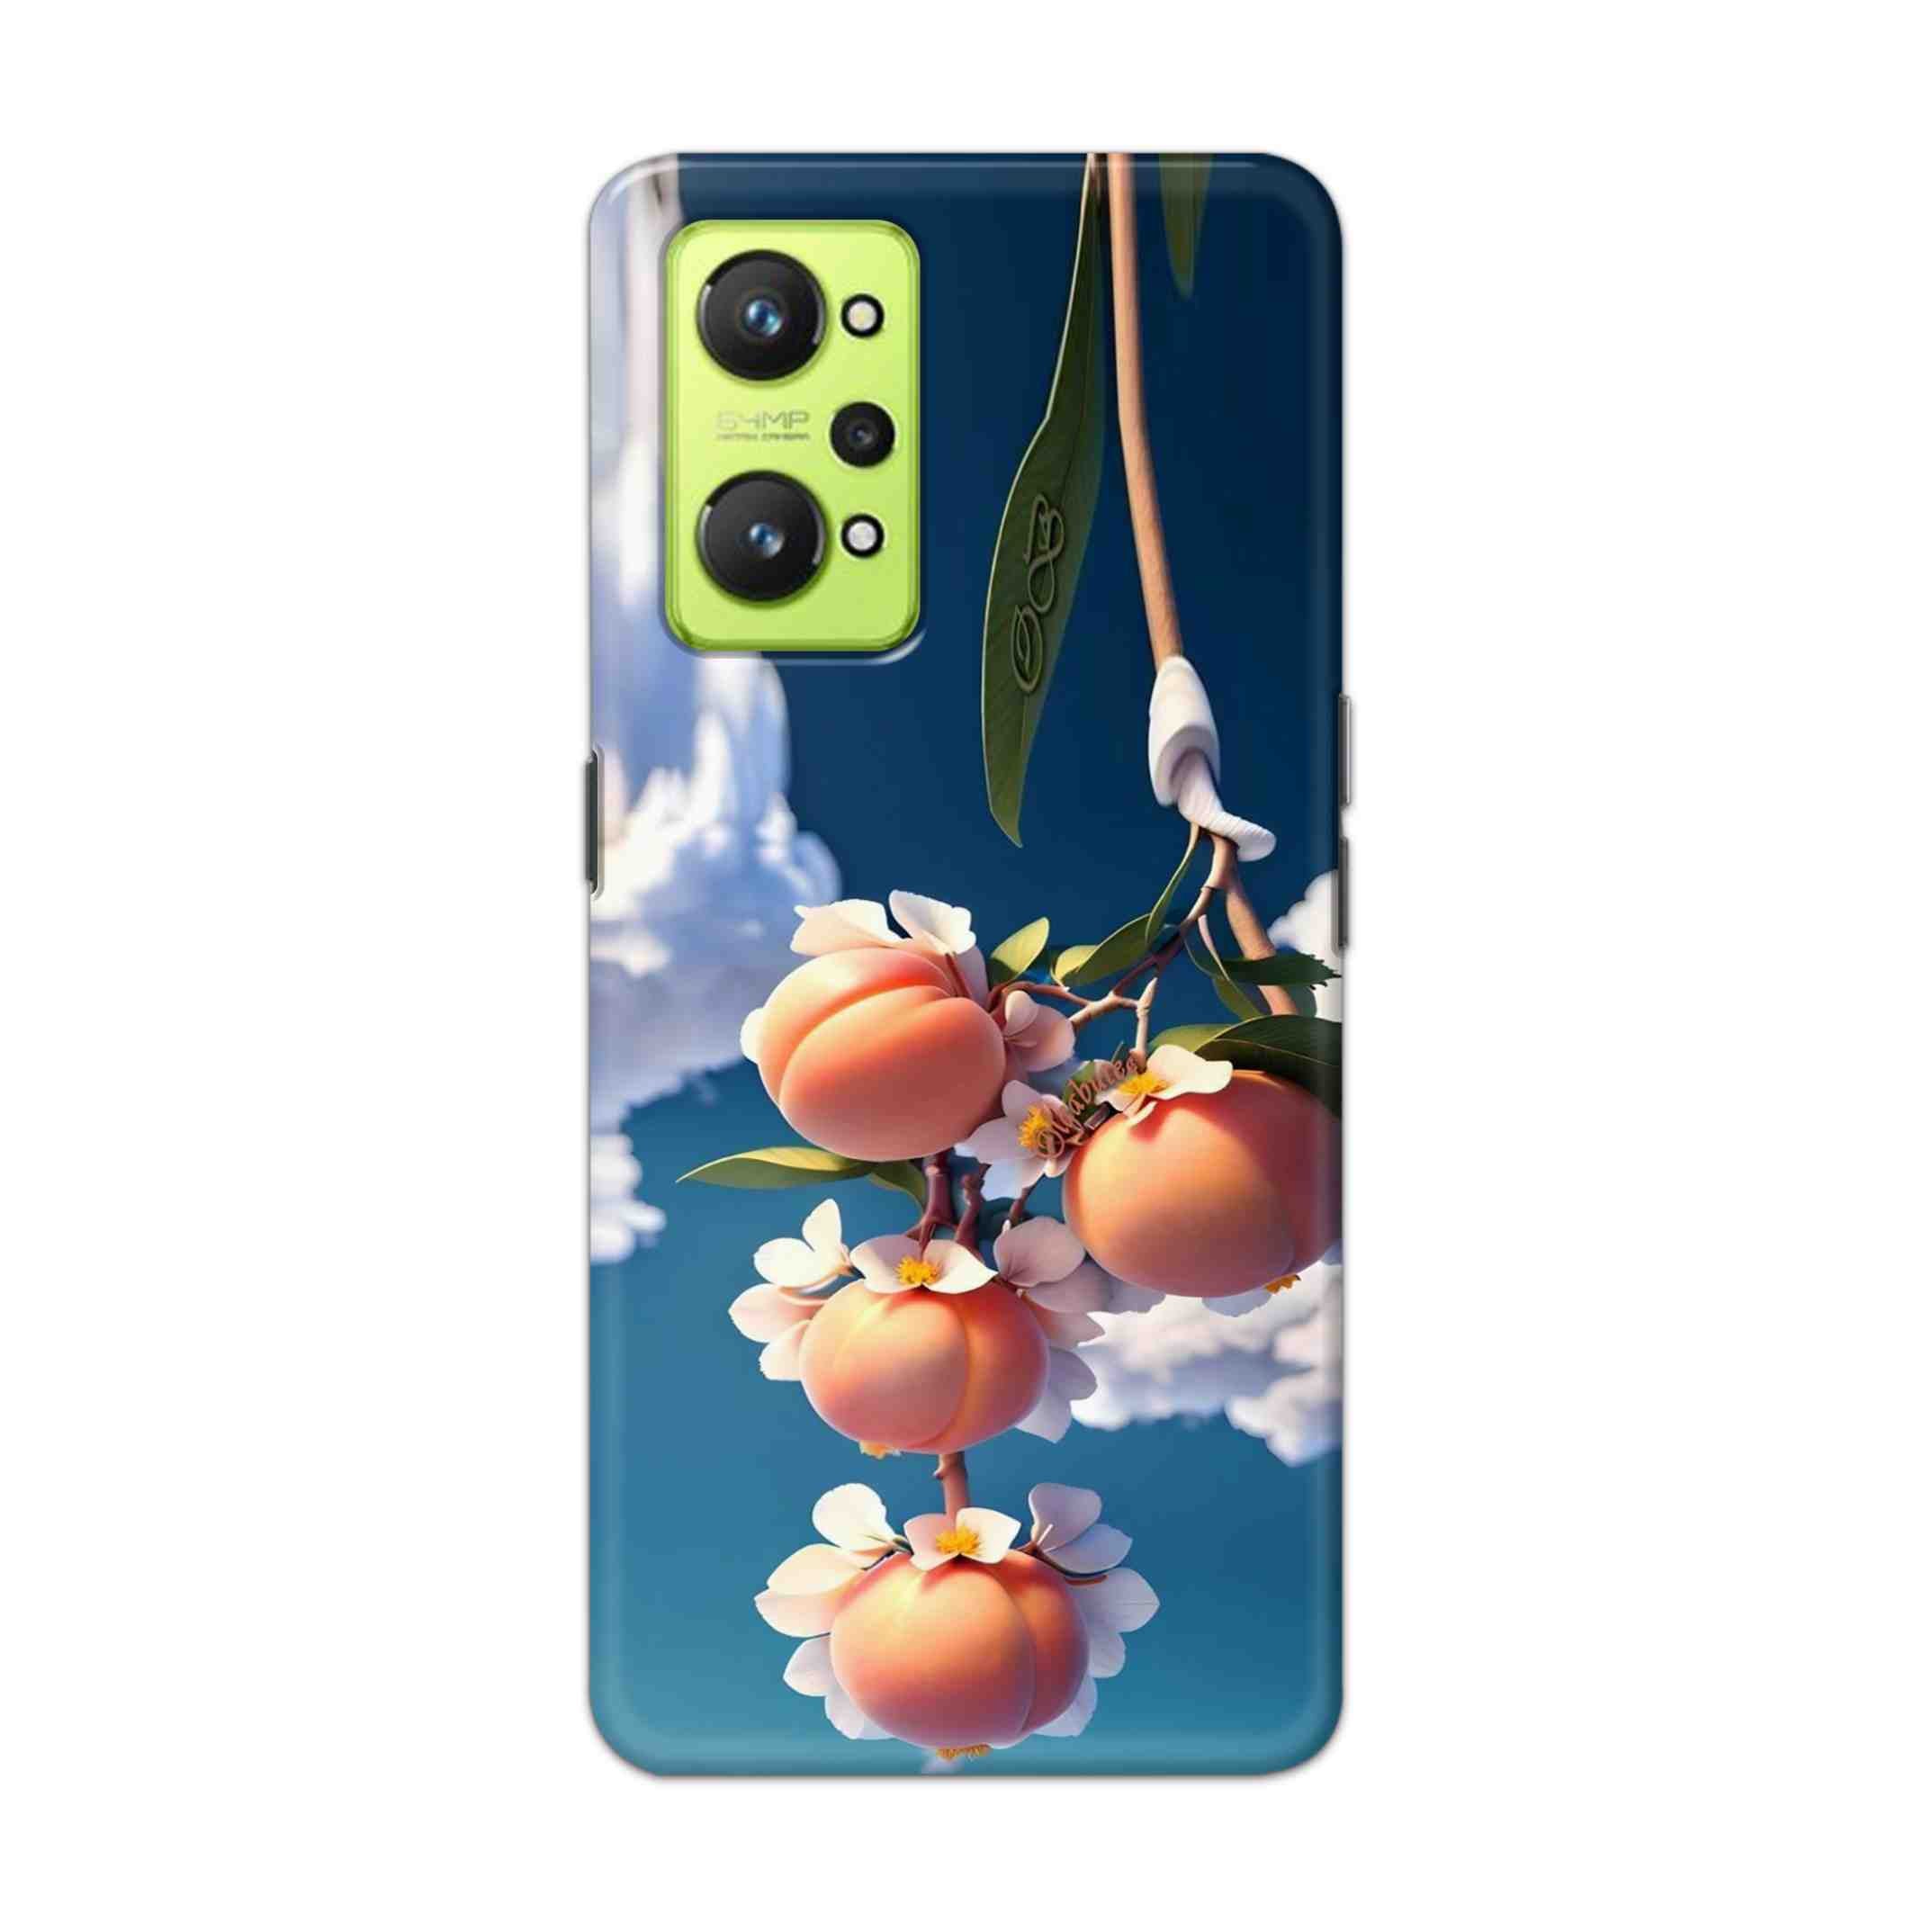 Buy Fruit Hard Back Mobile Phone Case Cover For Realme GT Neo2 Online